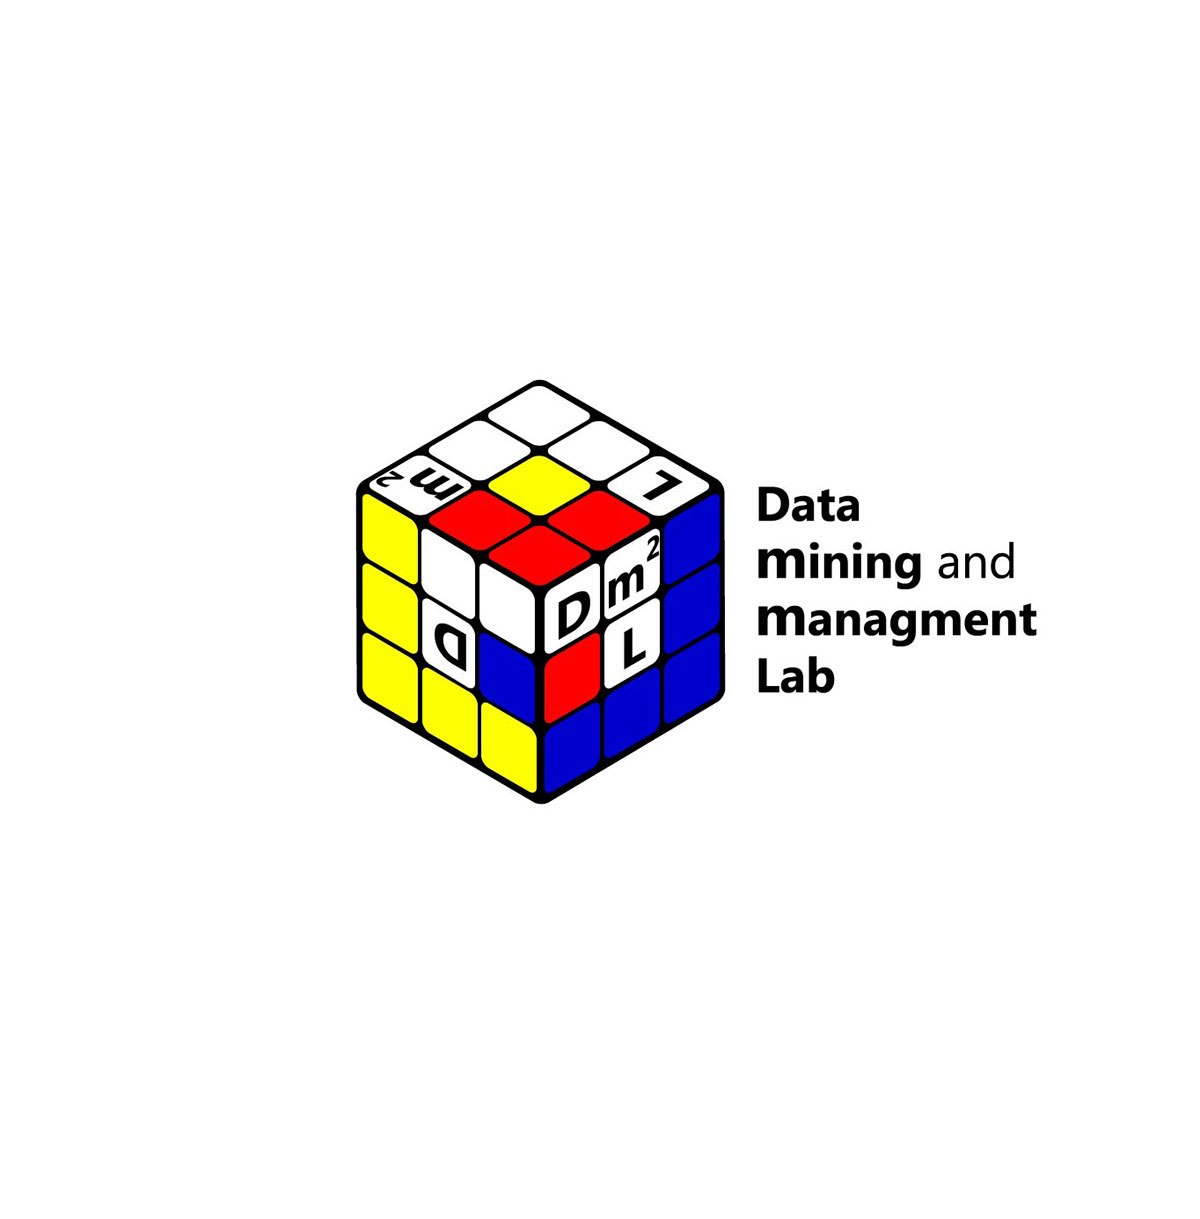 Data Mining Lab computre science mathematics Algorithms Rubics cube DmL logo